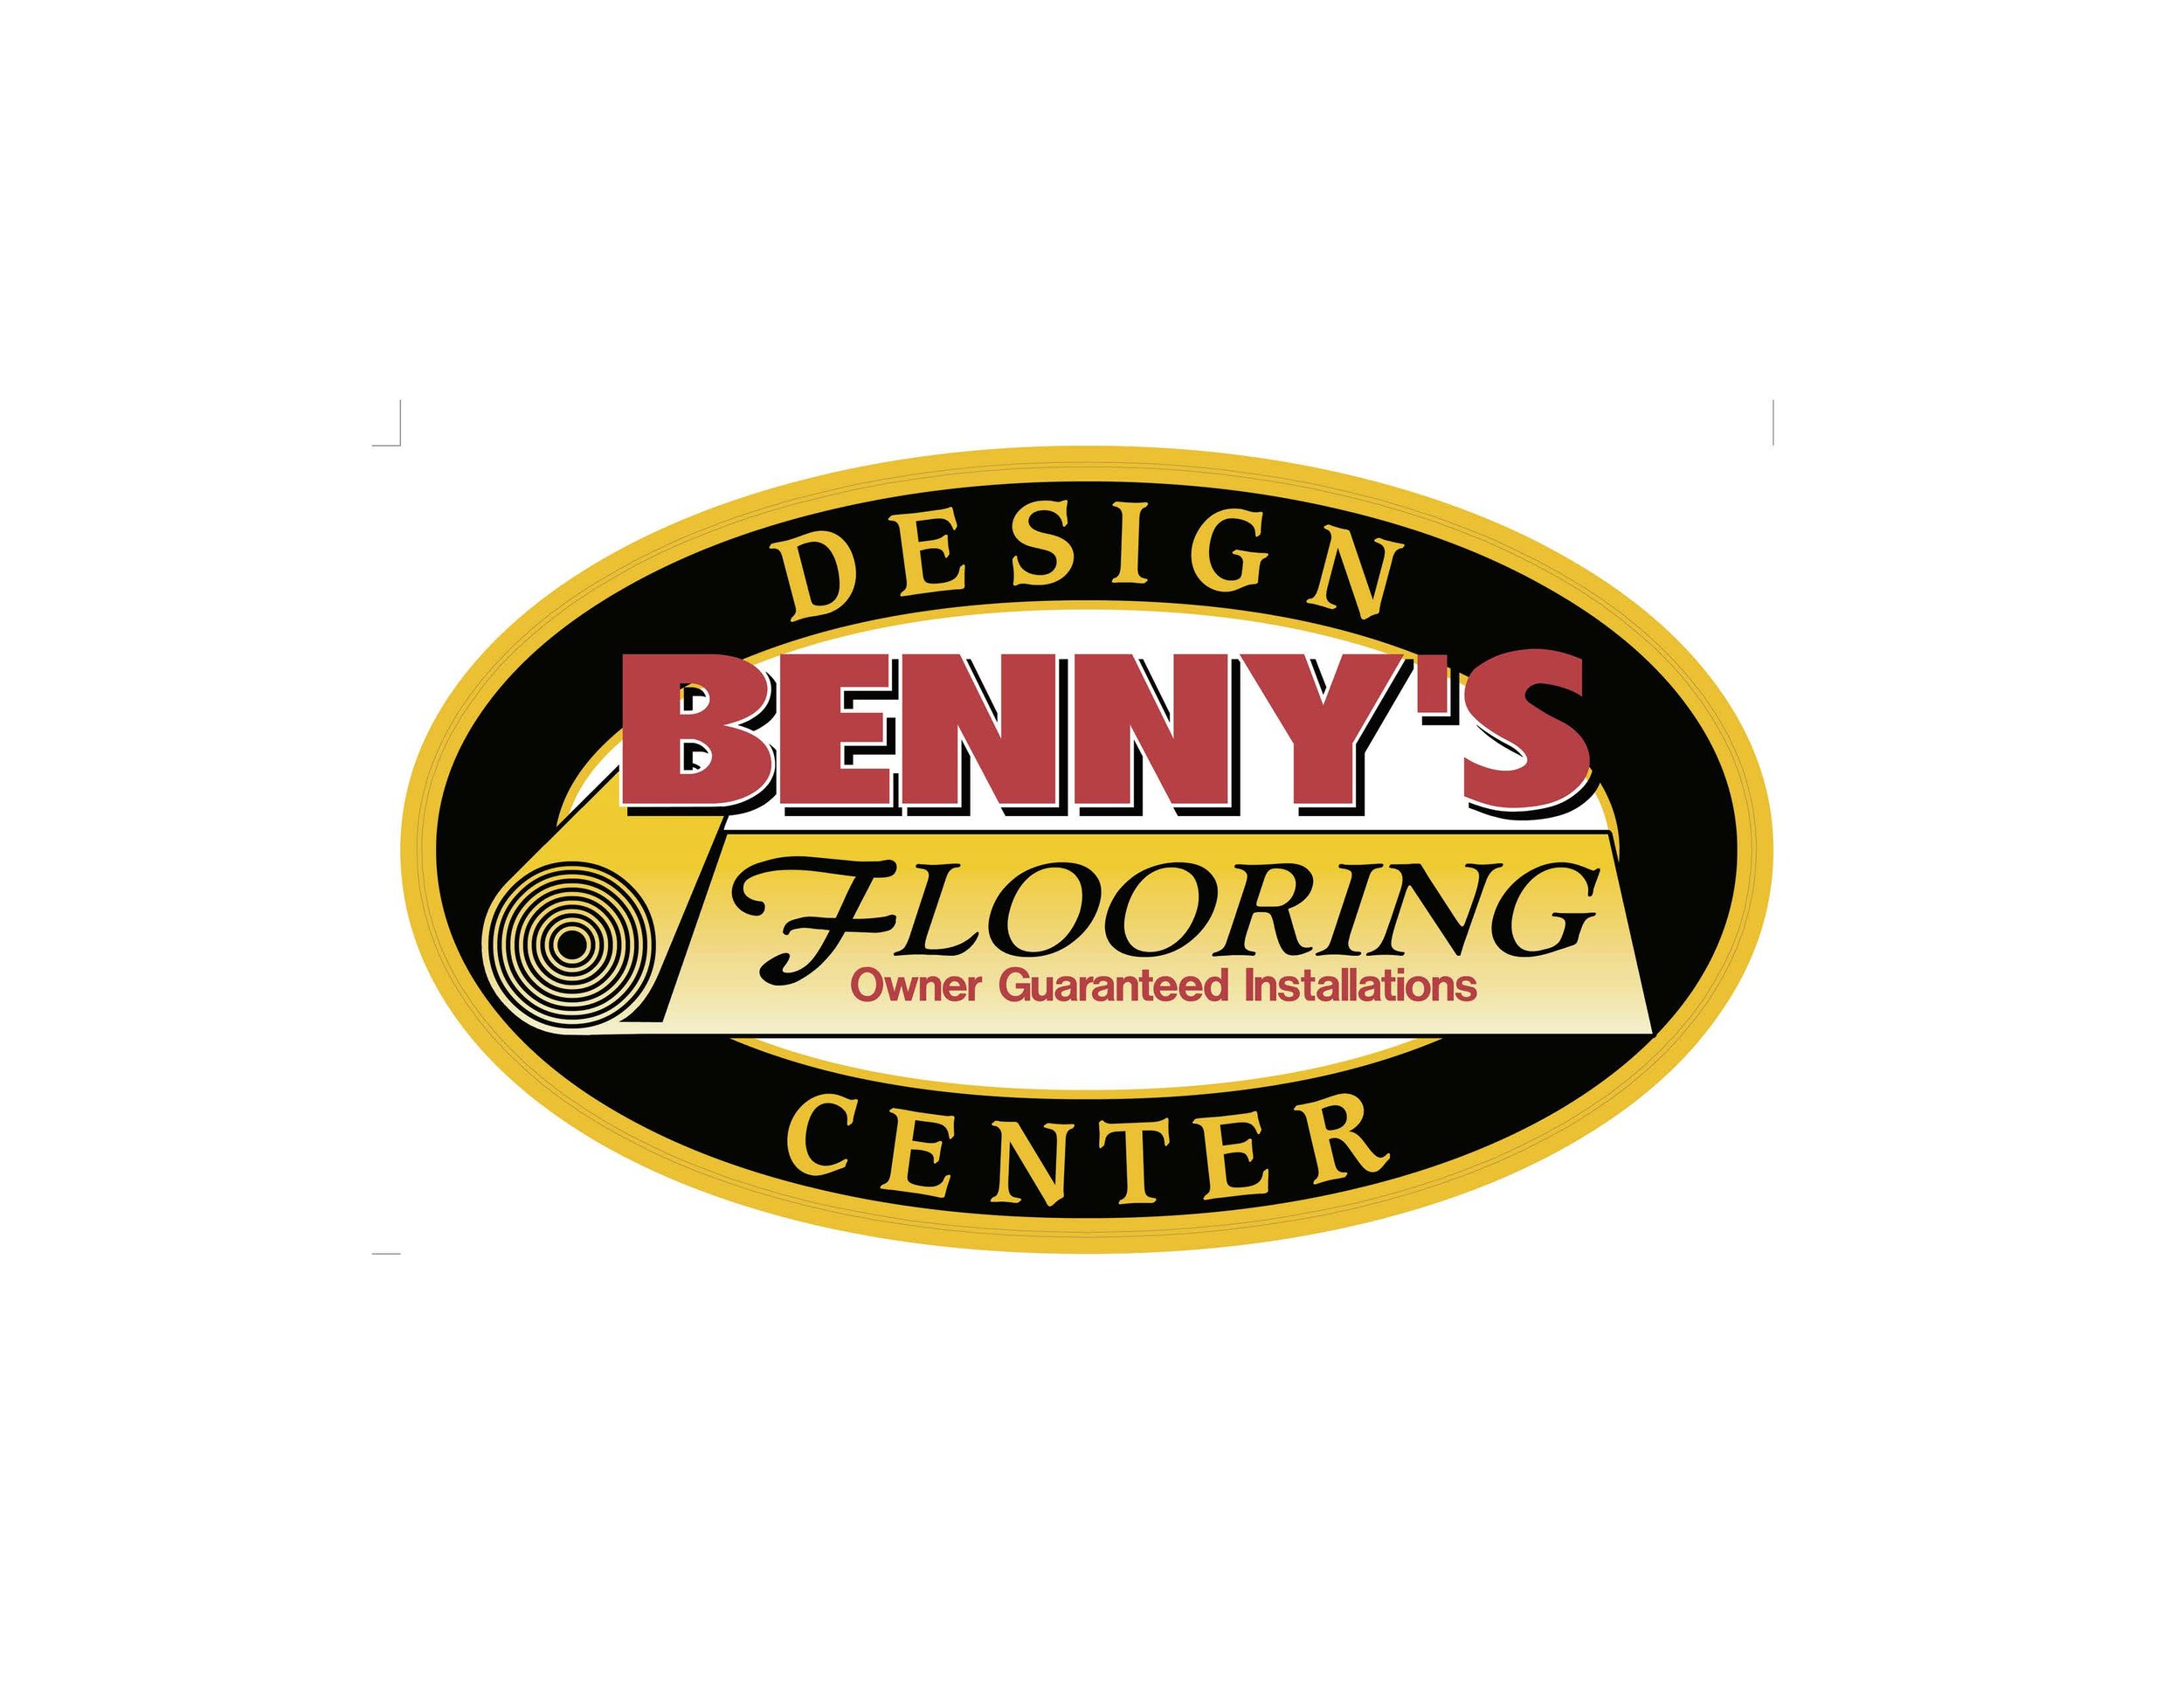 Benny_s Flooring - Design Center.jpg